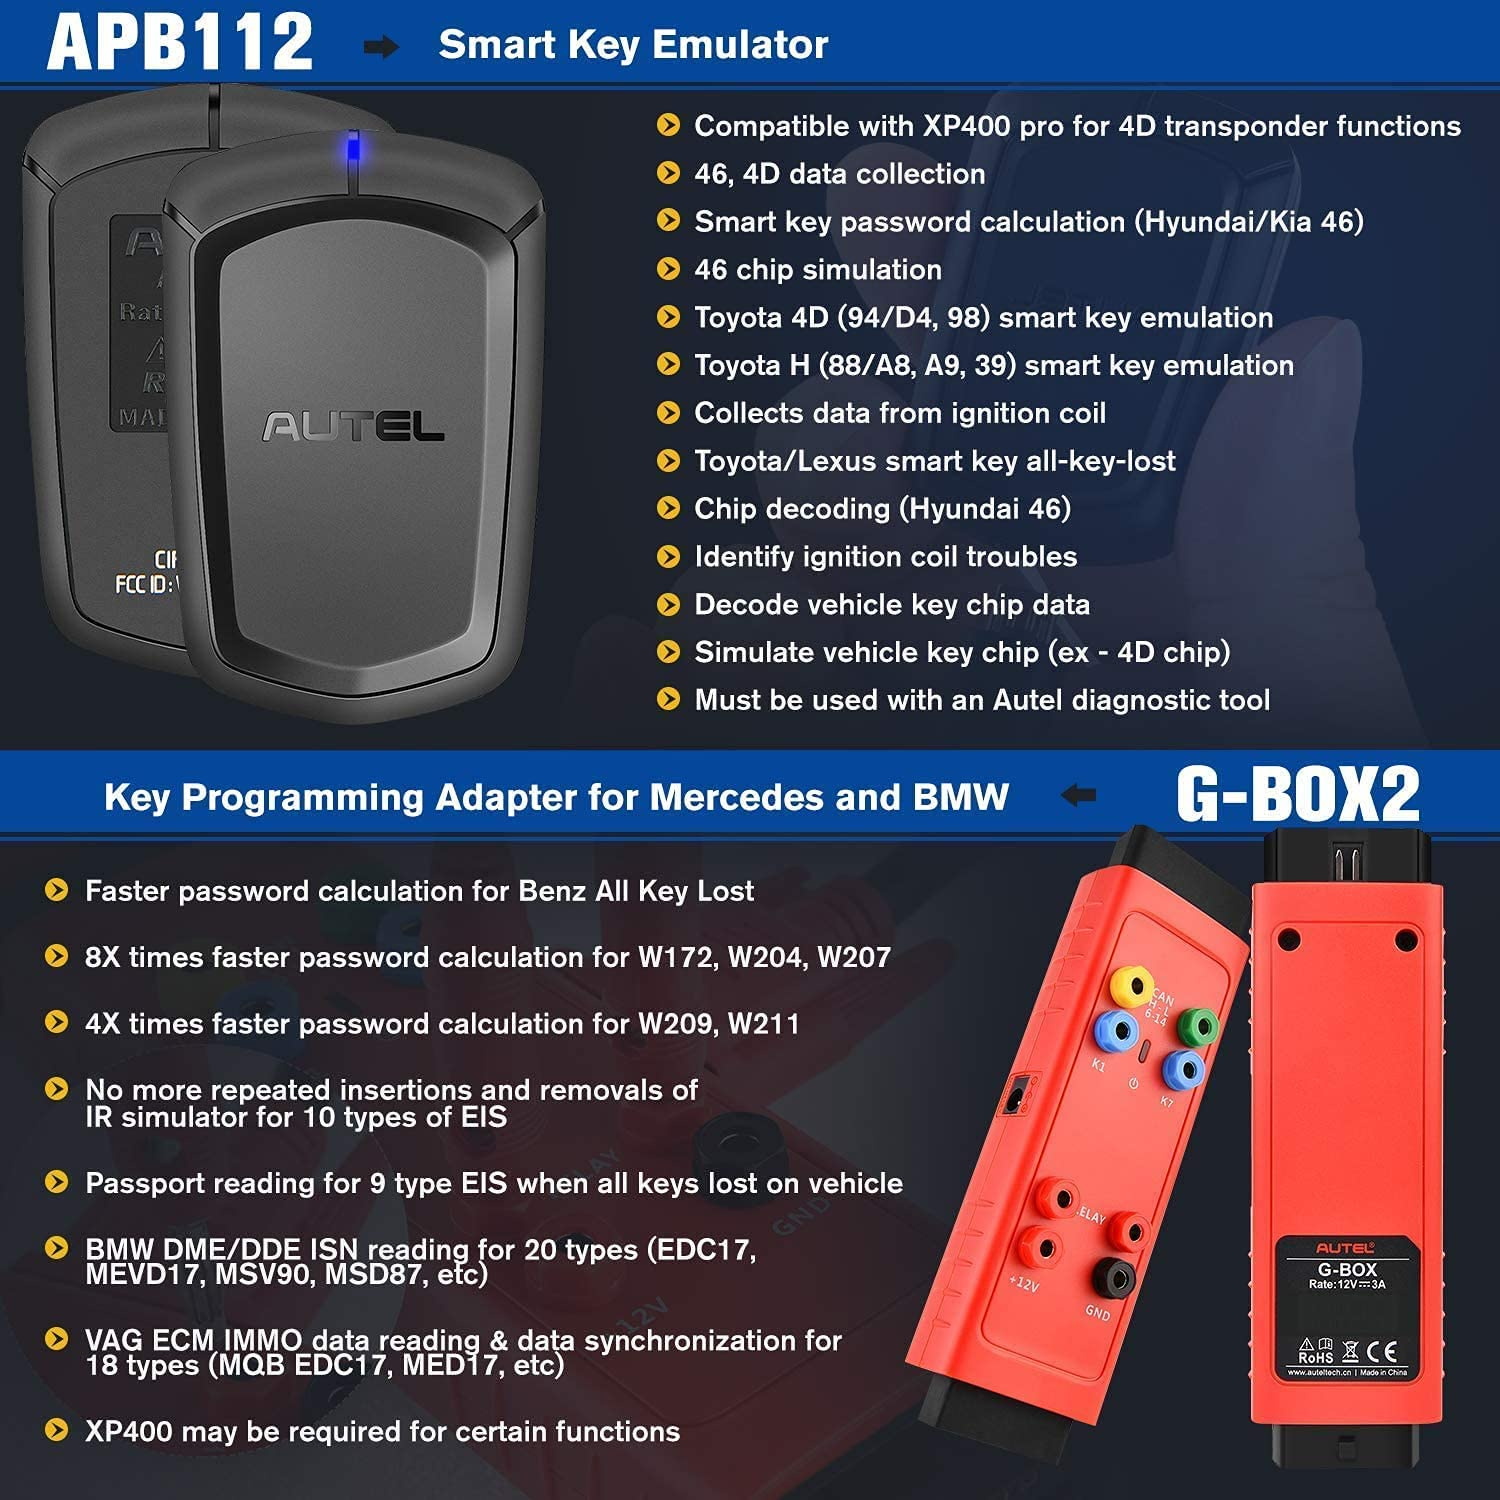 Autel IM508 II (Autel IM508S) Plus XP400 Pro with APB112 and G-BOX2